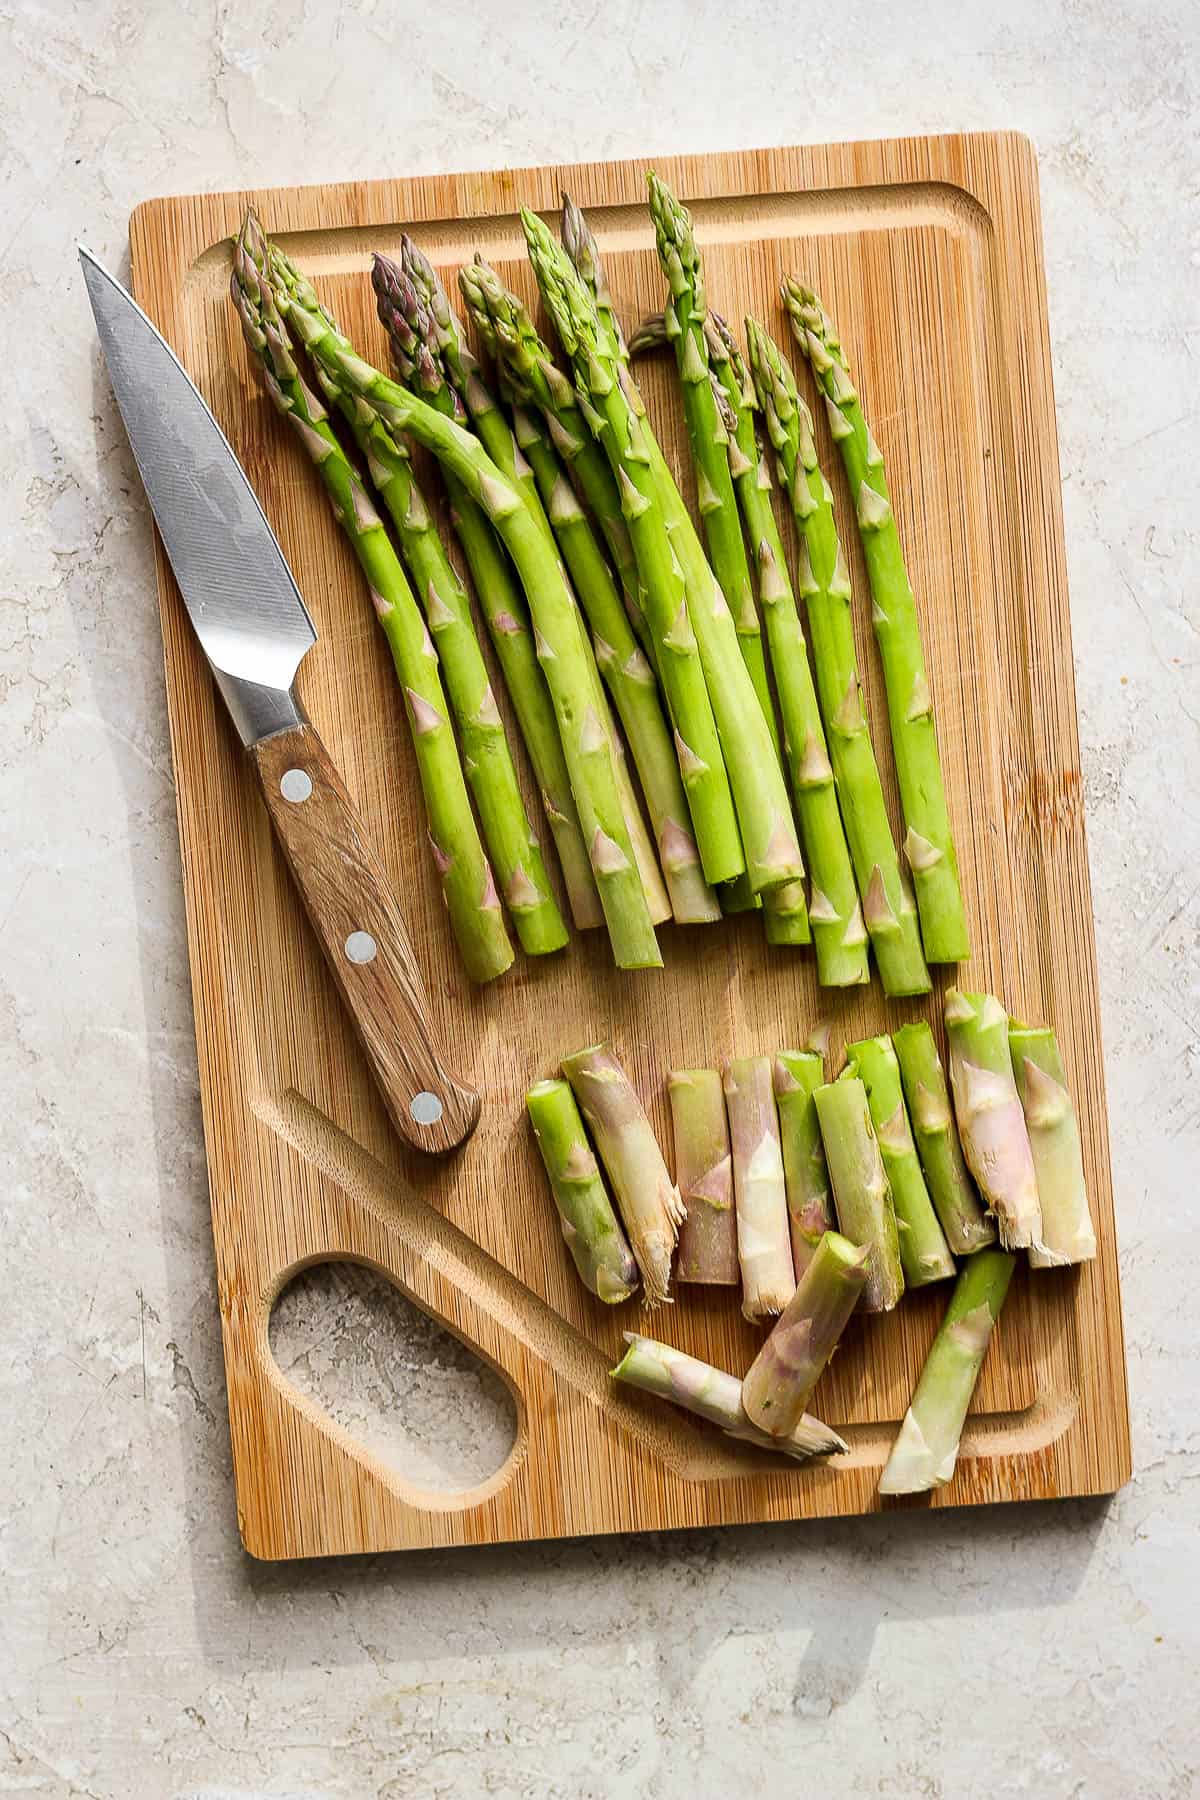 An easy tutorial on how to trim asparagus.